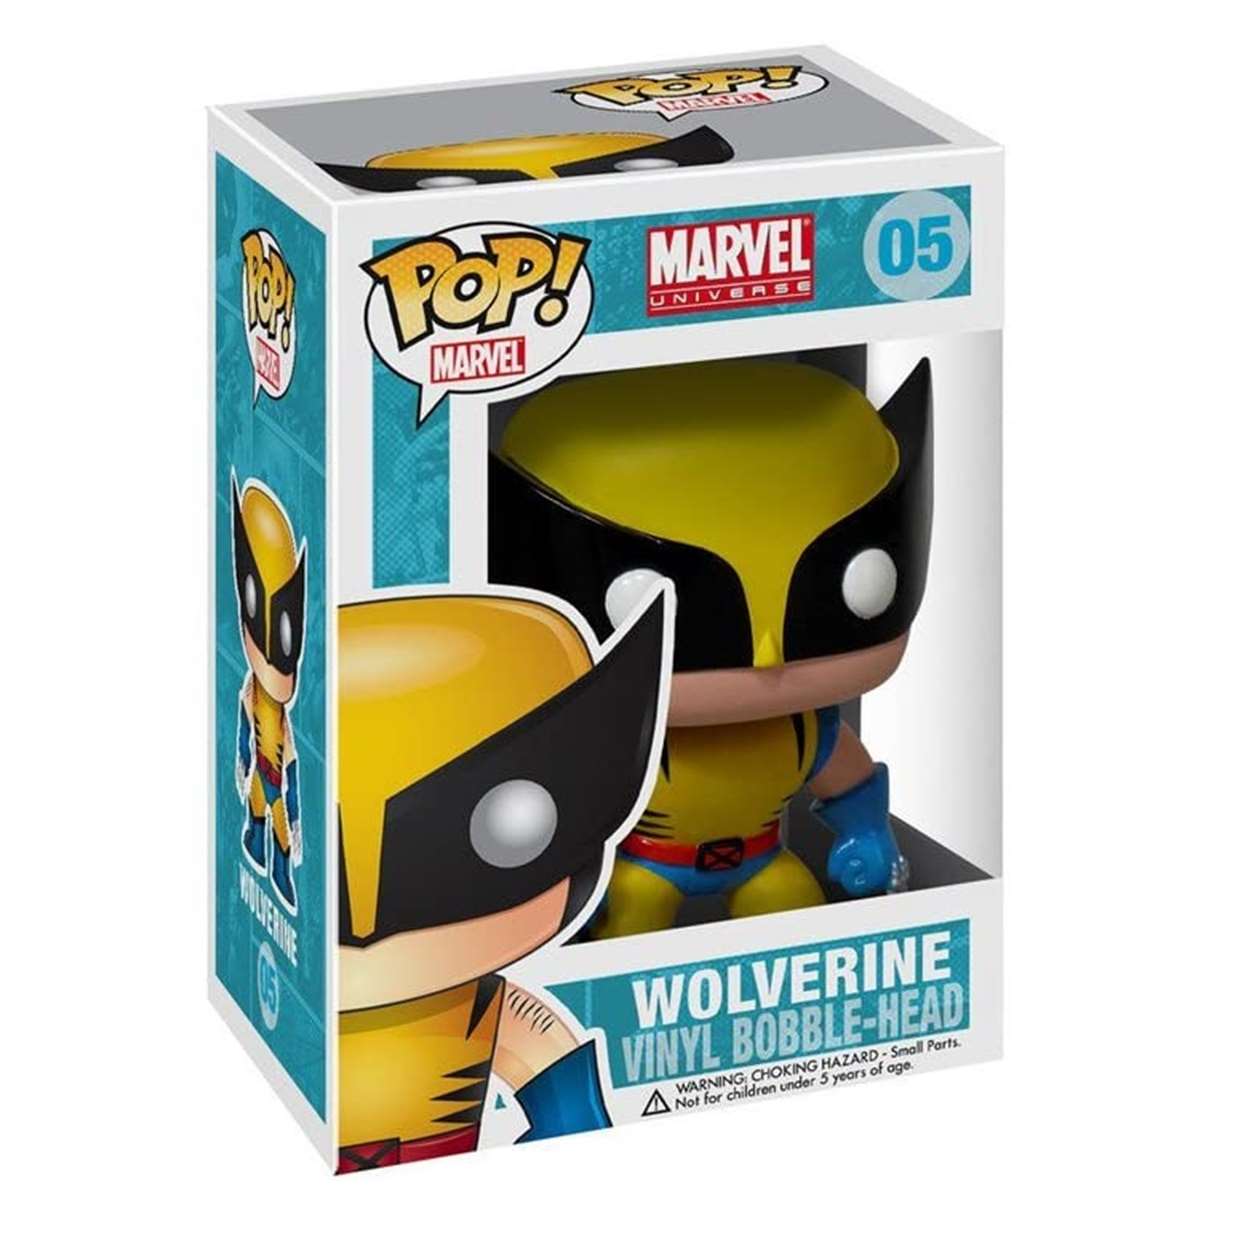 Wolverine #05 Figura X Men Funko Pop! Marvel Universe